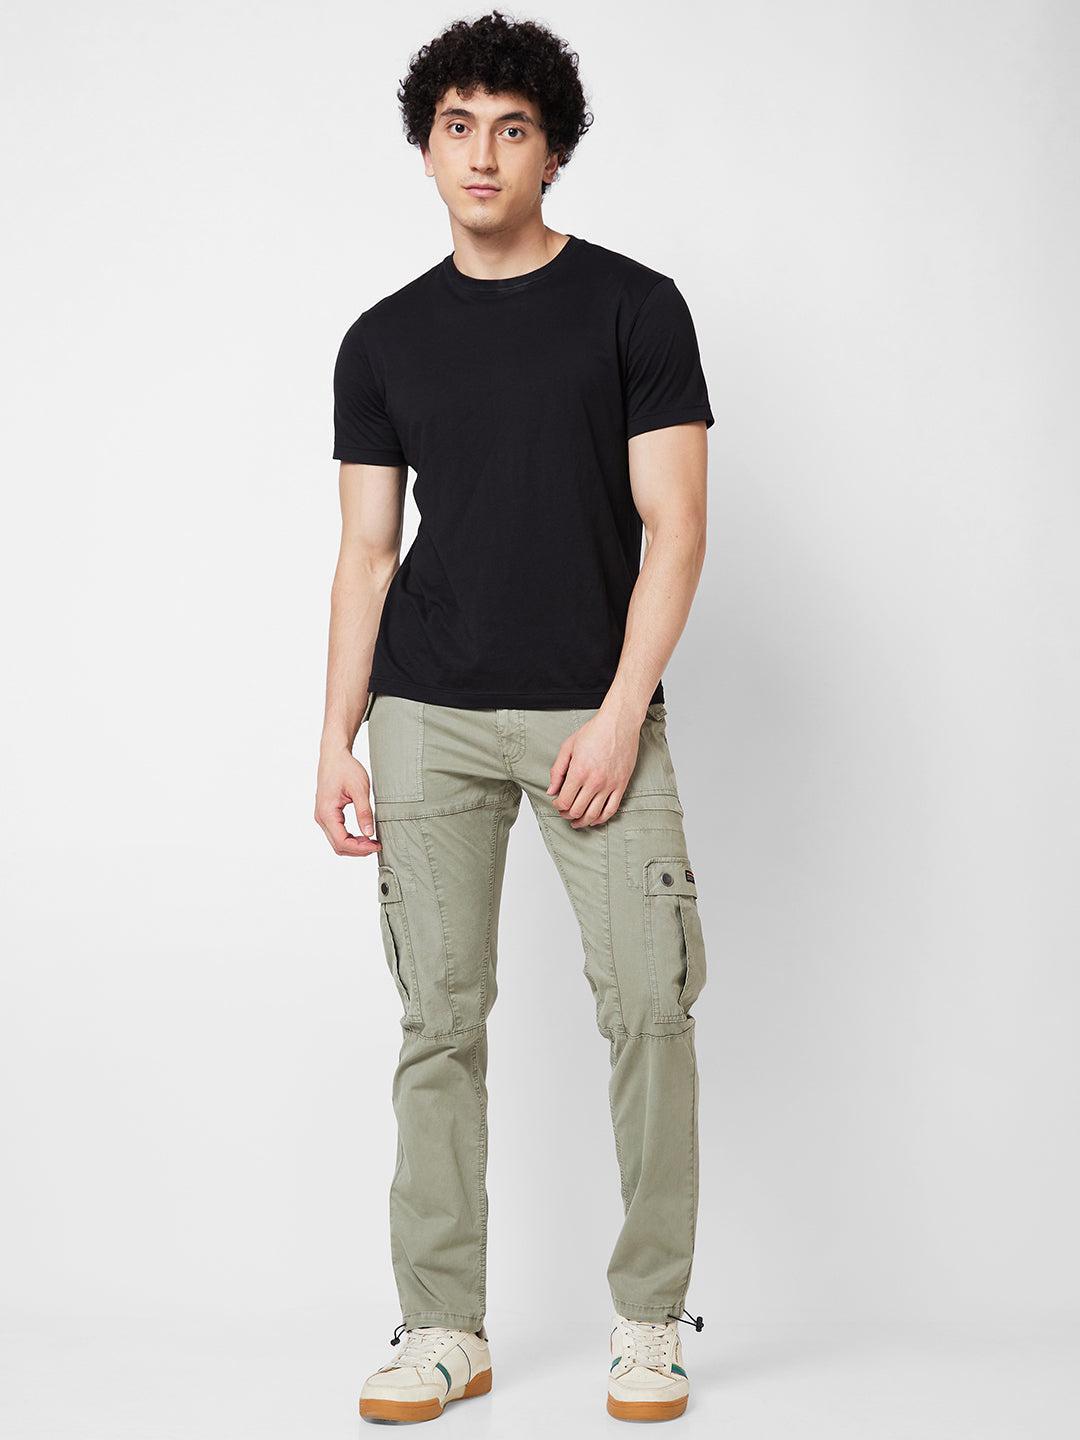 Spykar Khaki Solid Ankle-Length [waist rise] Casual Men Slim Fit Cargos -  Selling Fast at Pantaloons.com